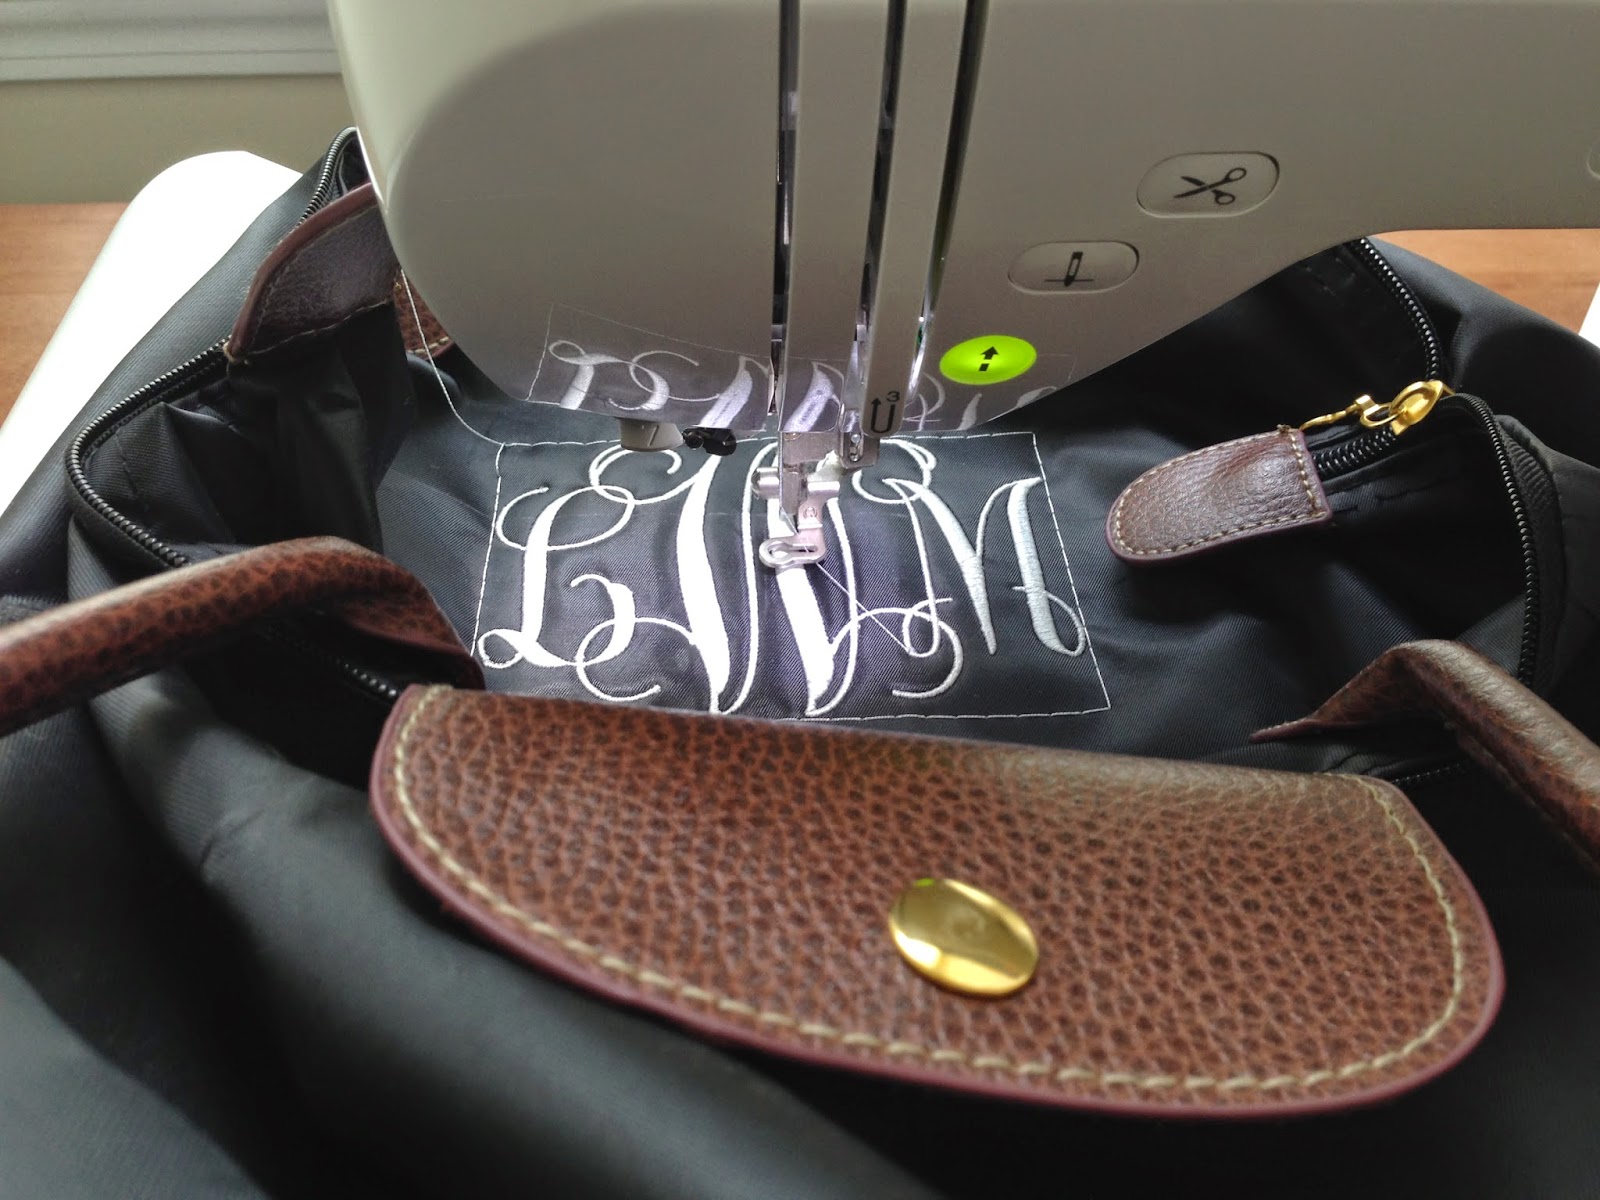 Can I DIY a Longchamp Bag? - Sheep and Stitch